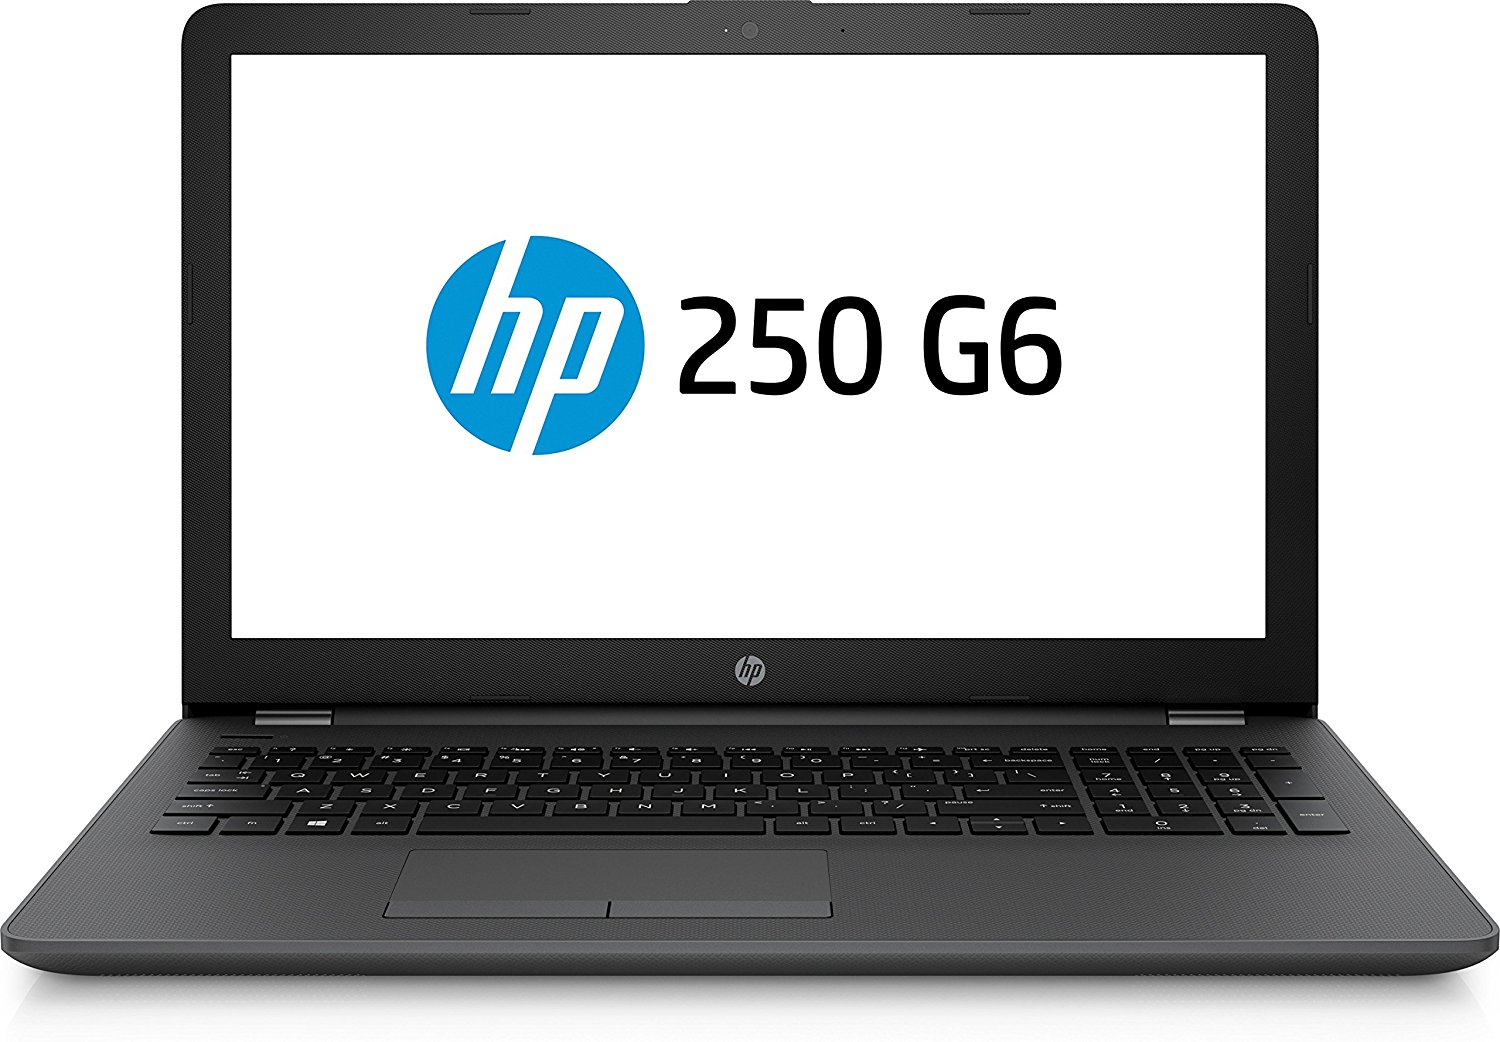 Hp 250 G6 3xl40pa Laptop Intel Celeron Dual Core With 4gb Ram 1tb Hdd 156 Inch Display Screen 4743